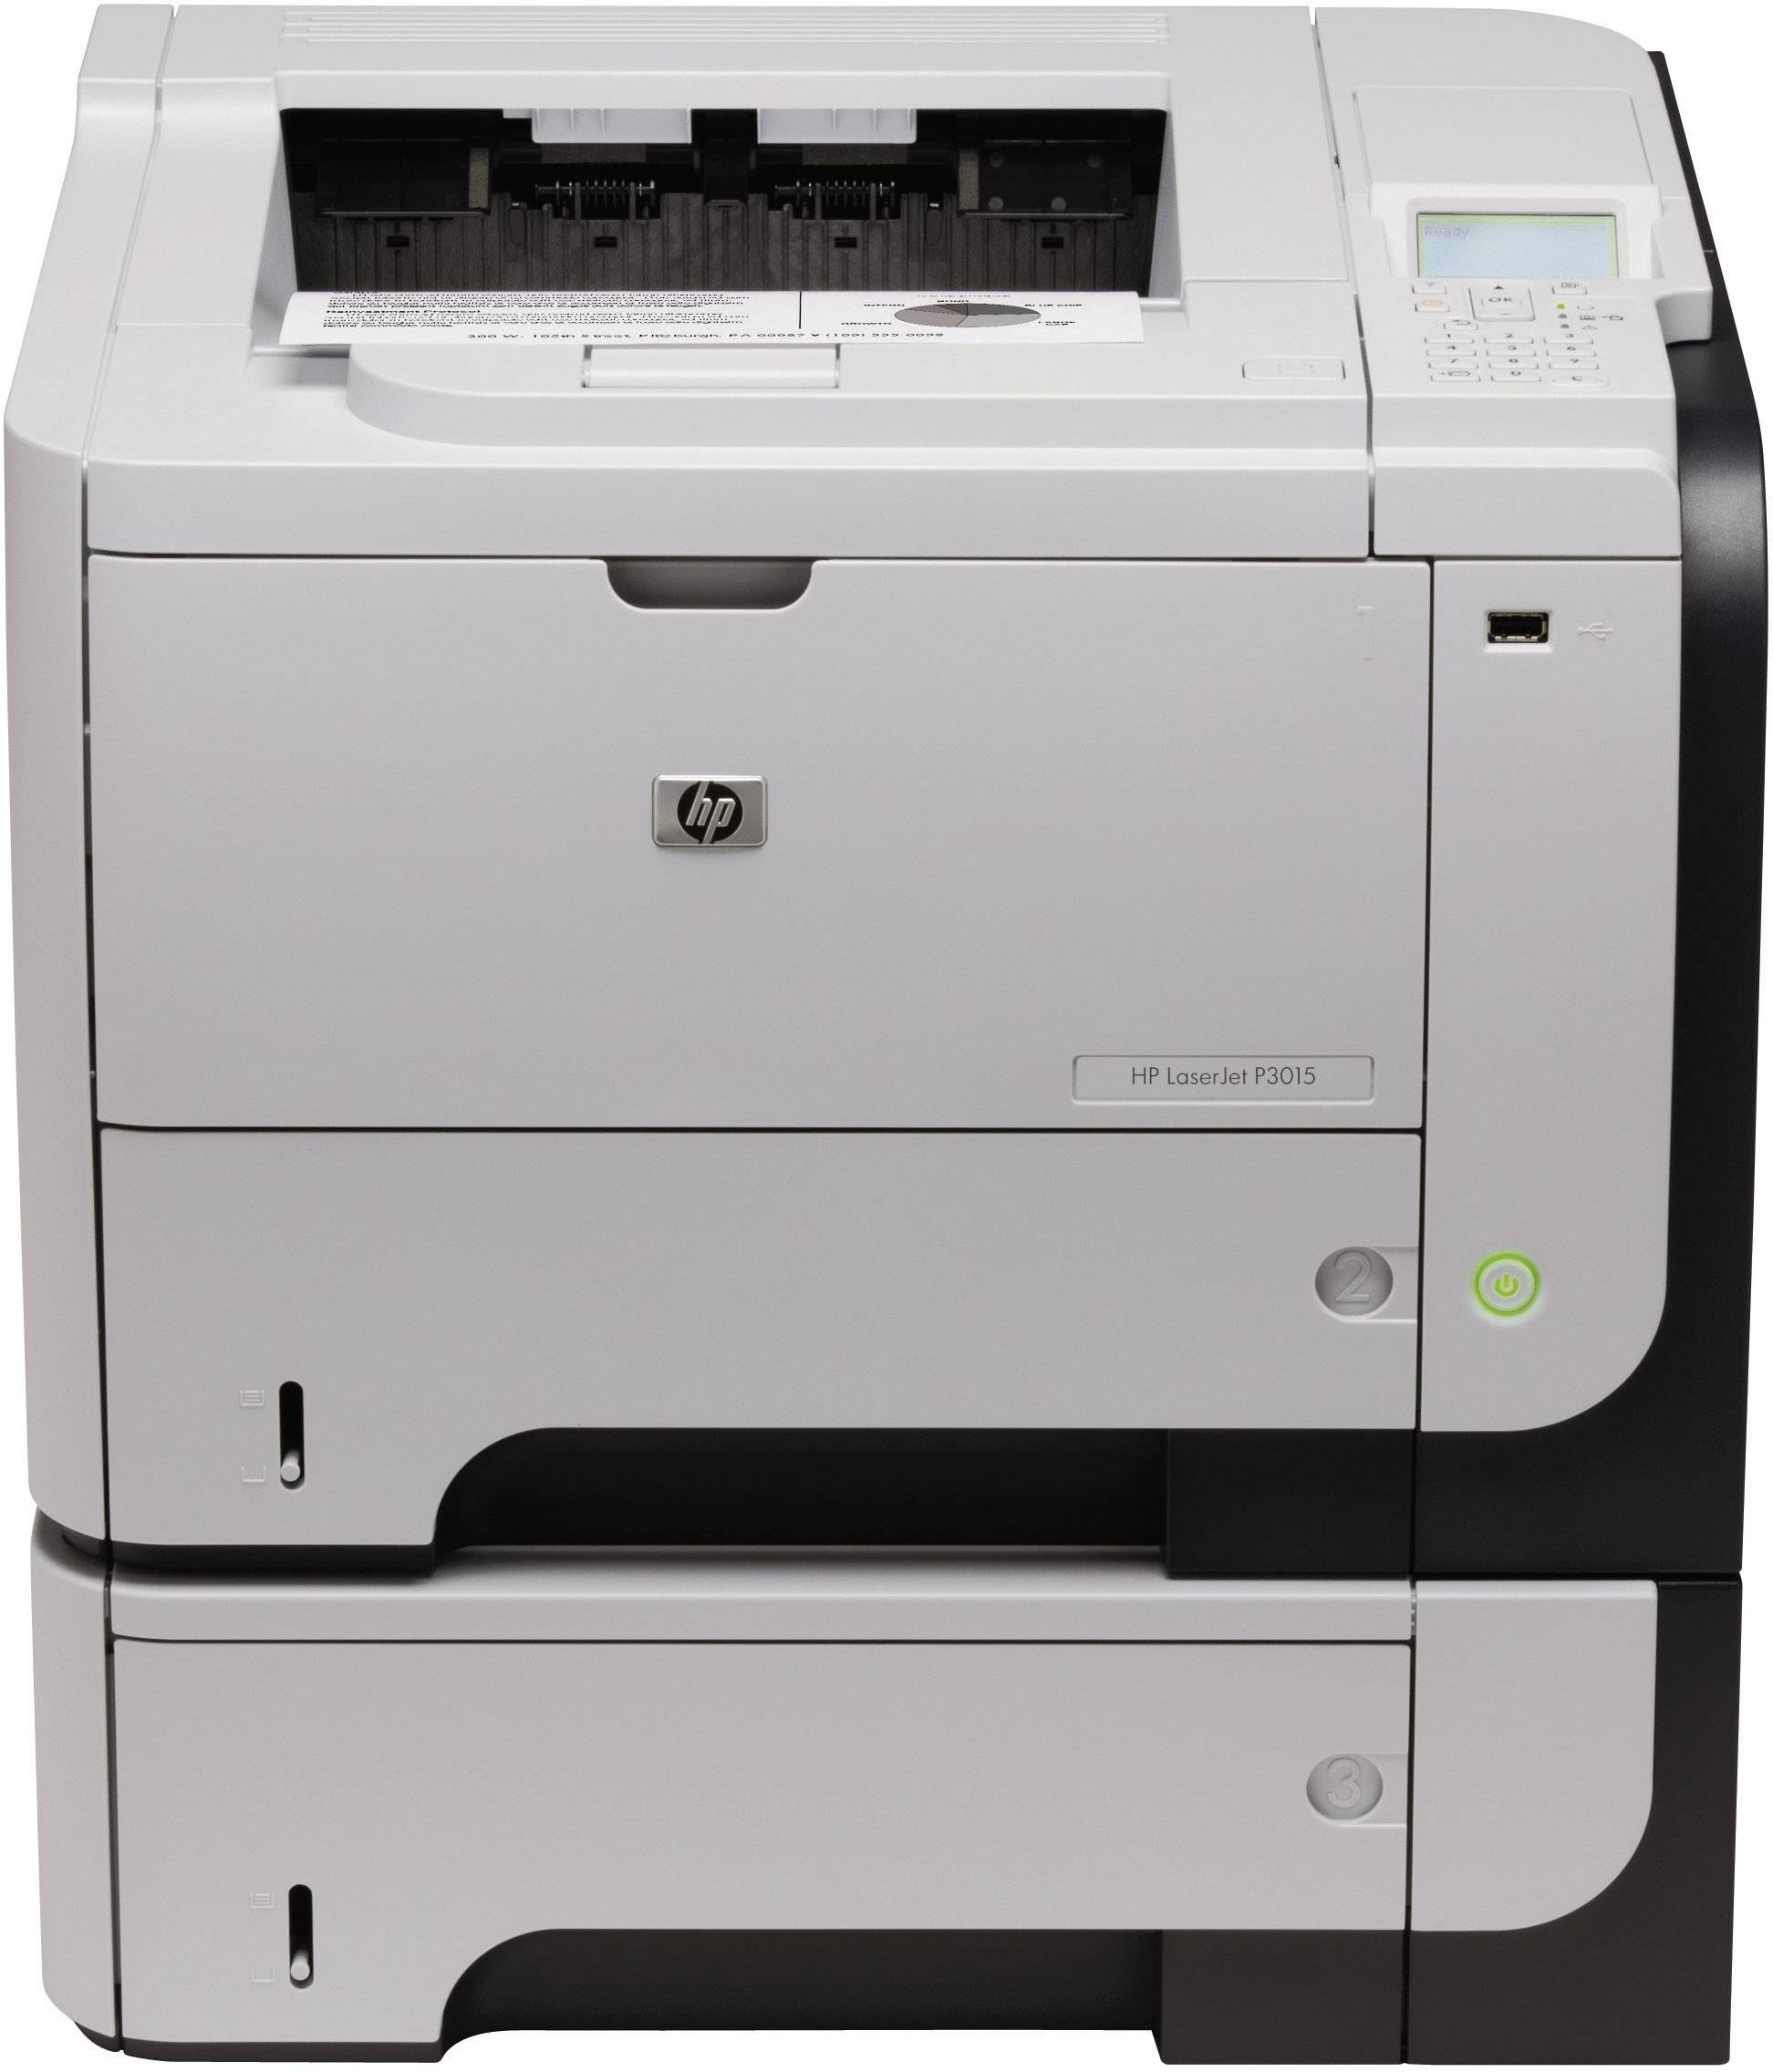 hp monochrome laser printer